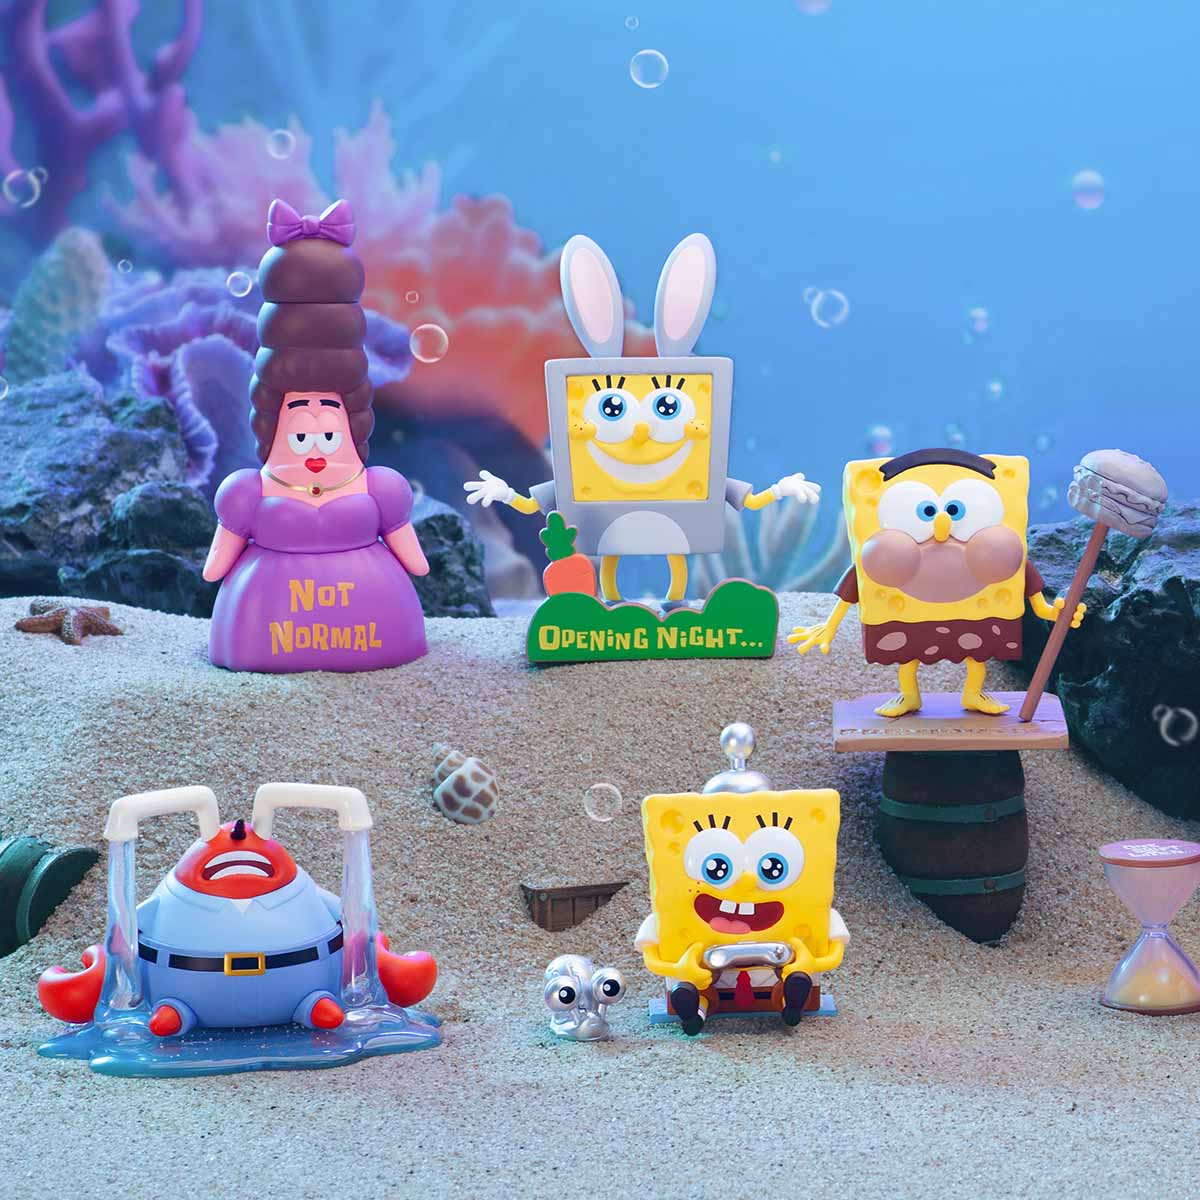 SpongeBob Life Transitions Series Figures | Blind Box | Pop Mart